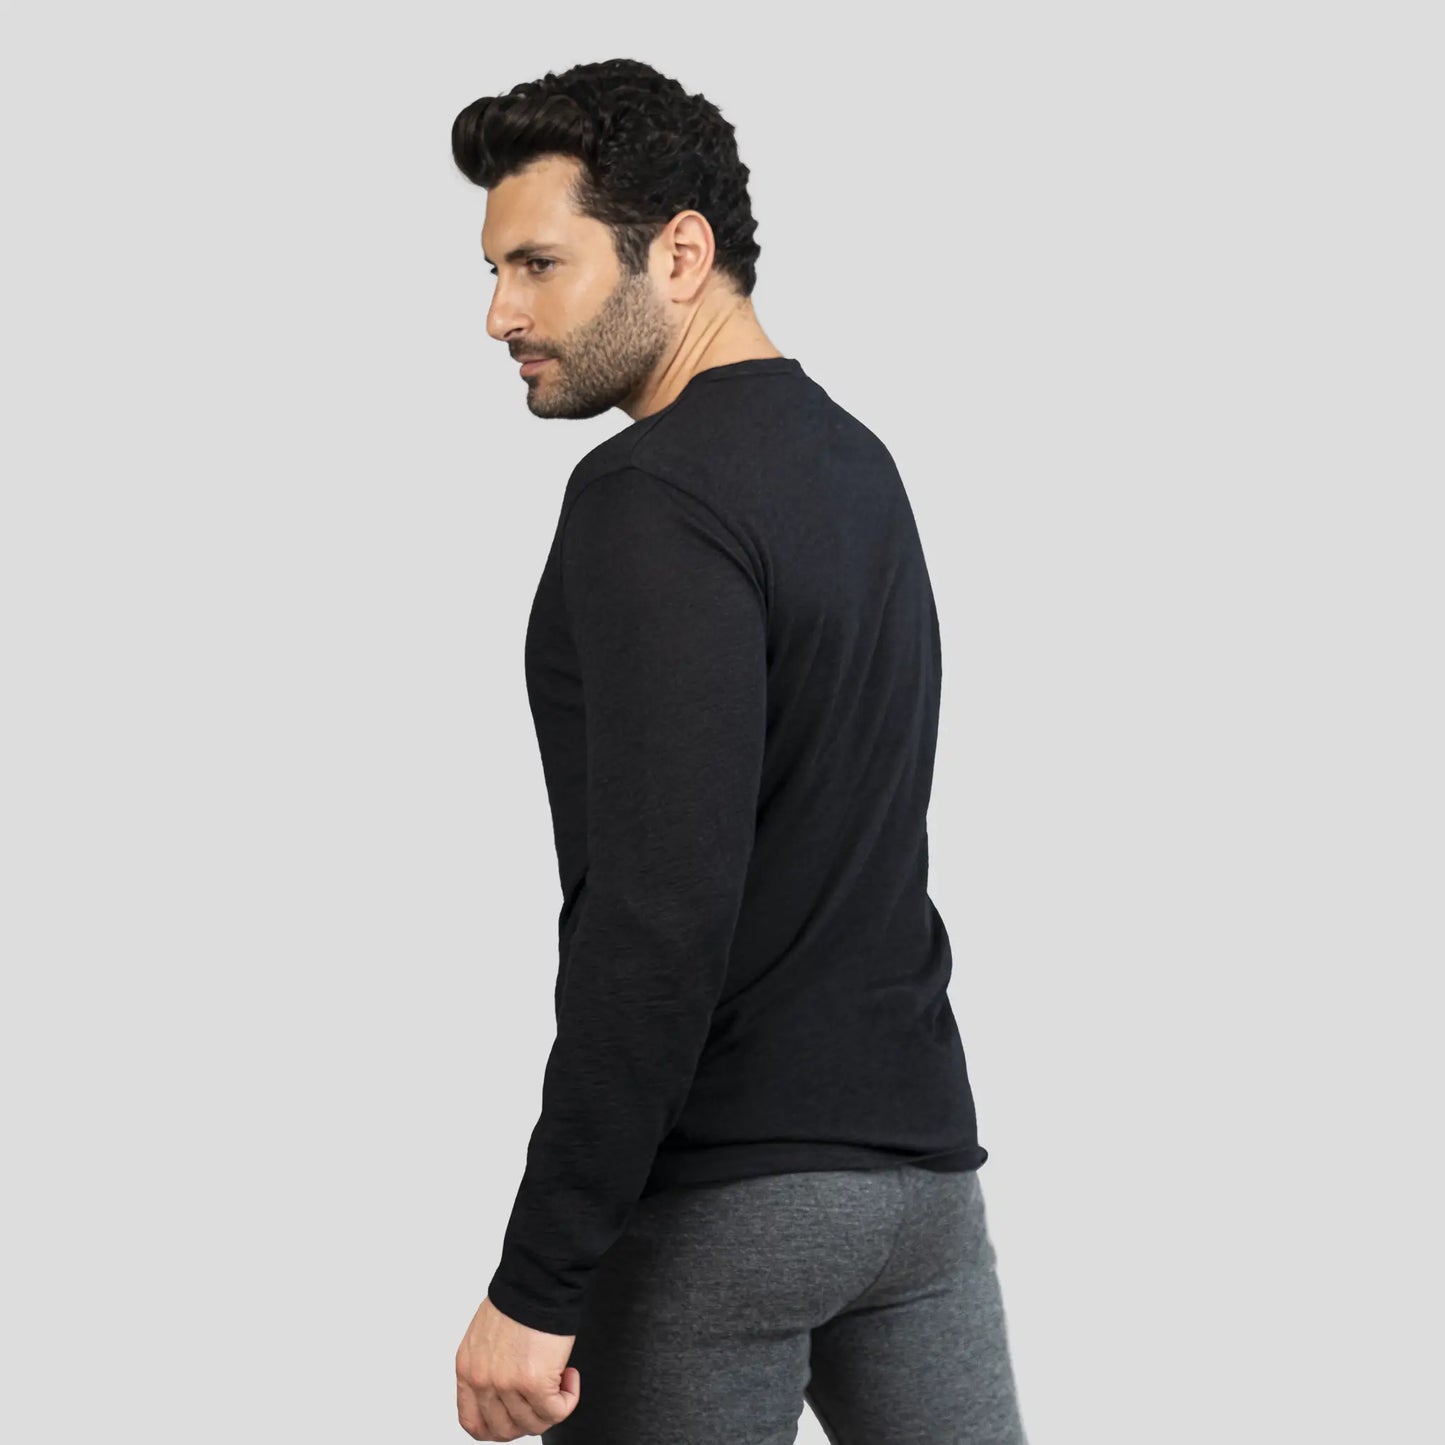 mens high performance long sleeve tshirt color black